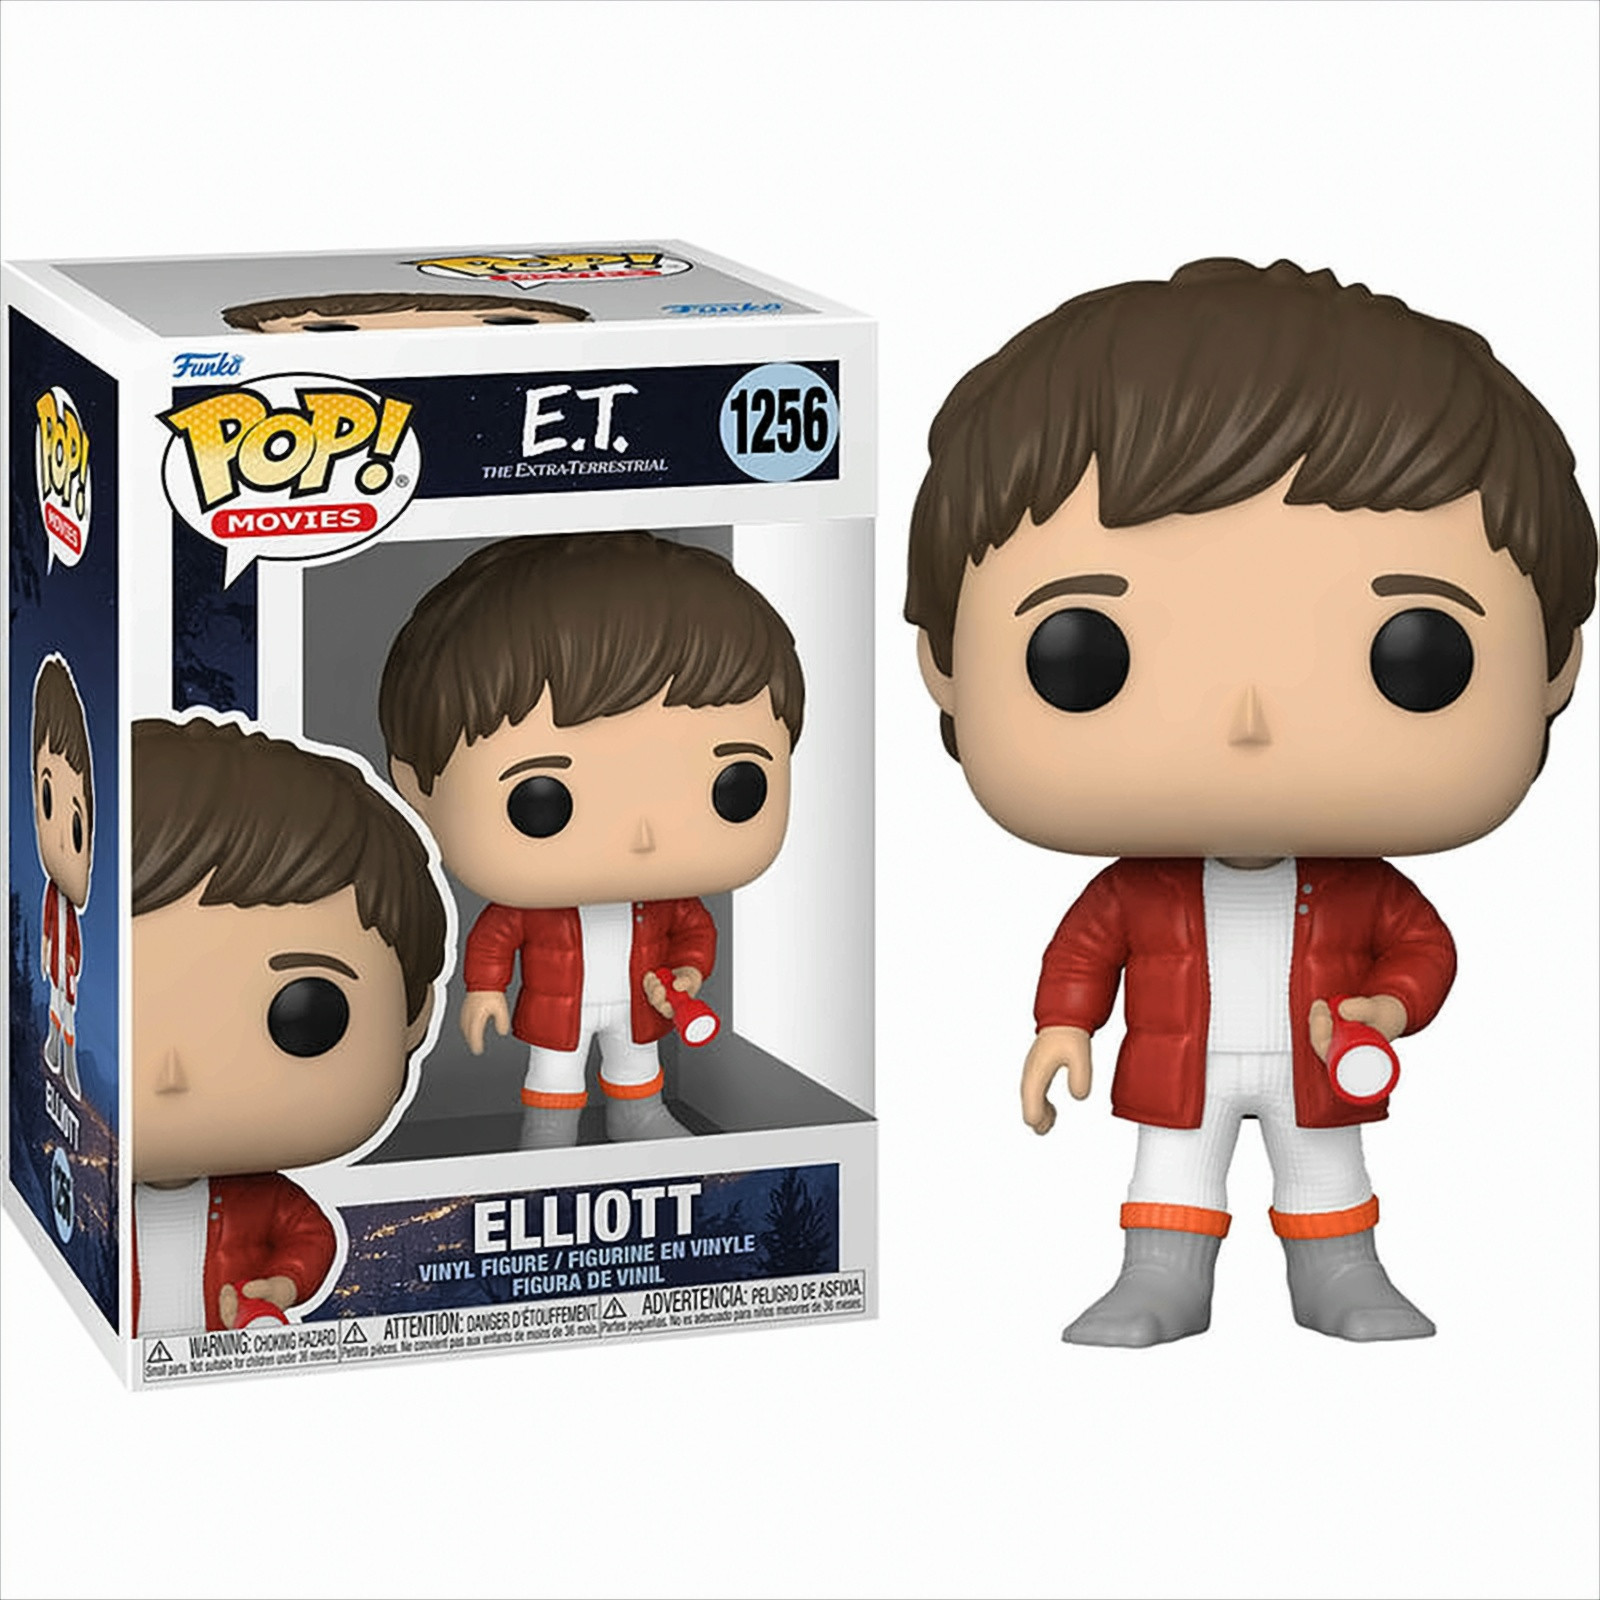 40th E.T. - Anniversary Elliot POP -